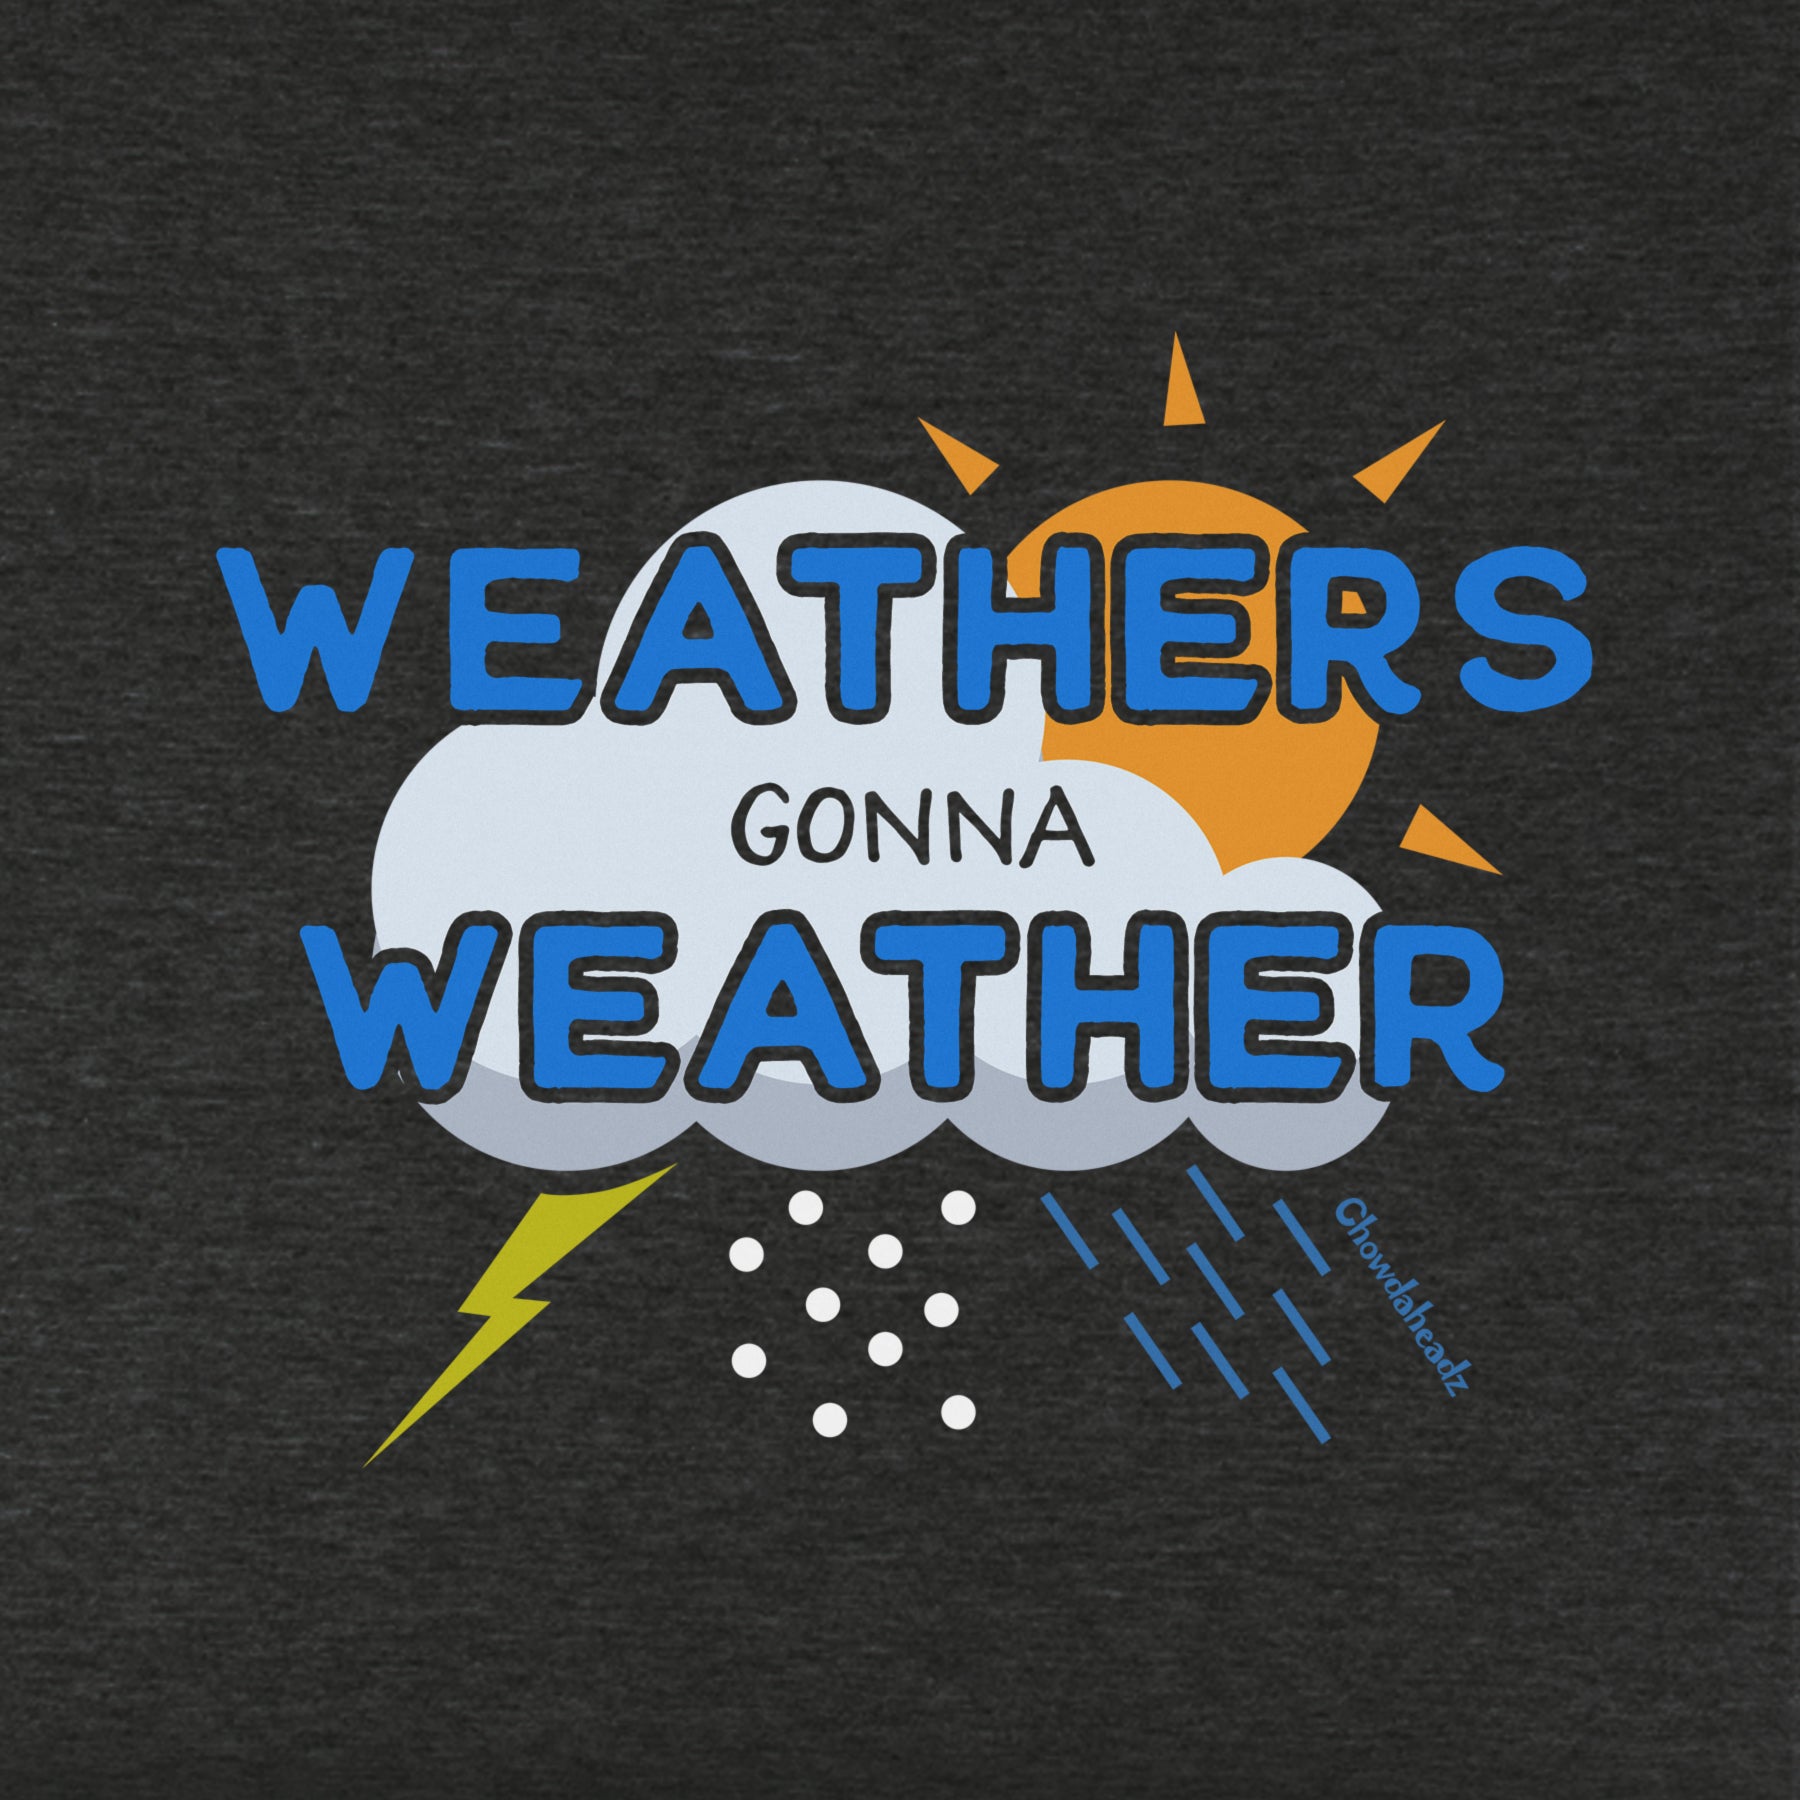 Weathers Gonna Weather Youth T-Shirt - Chowdaheadz